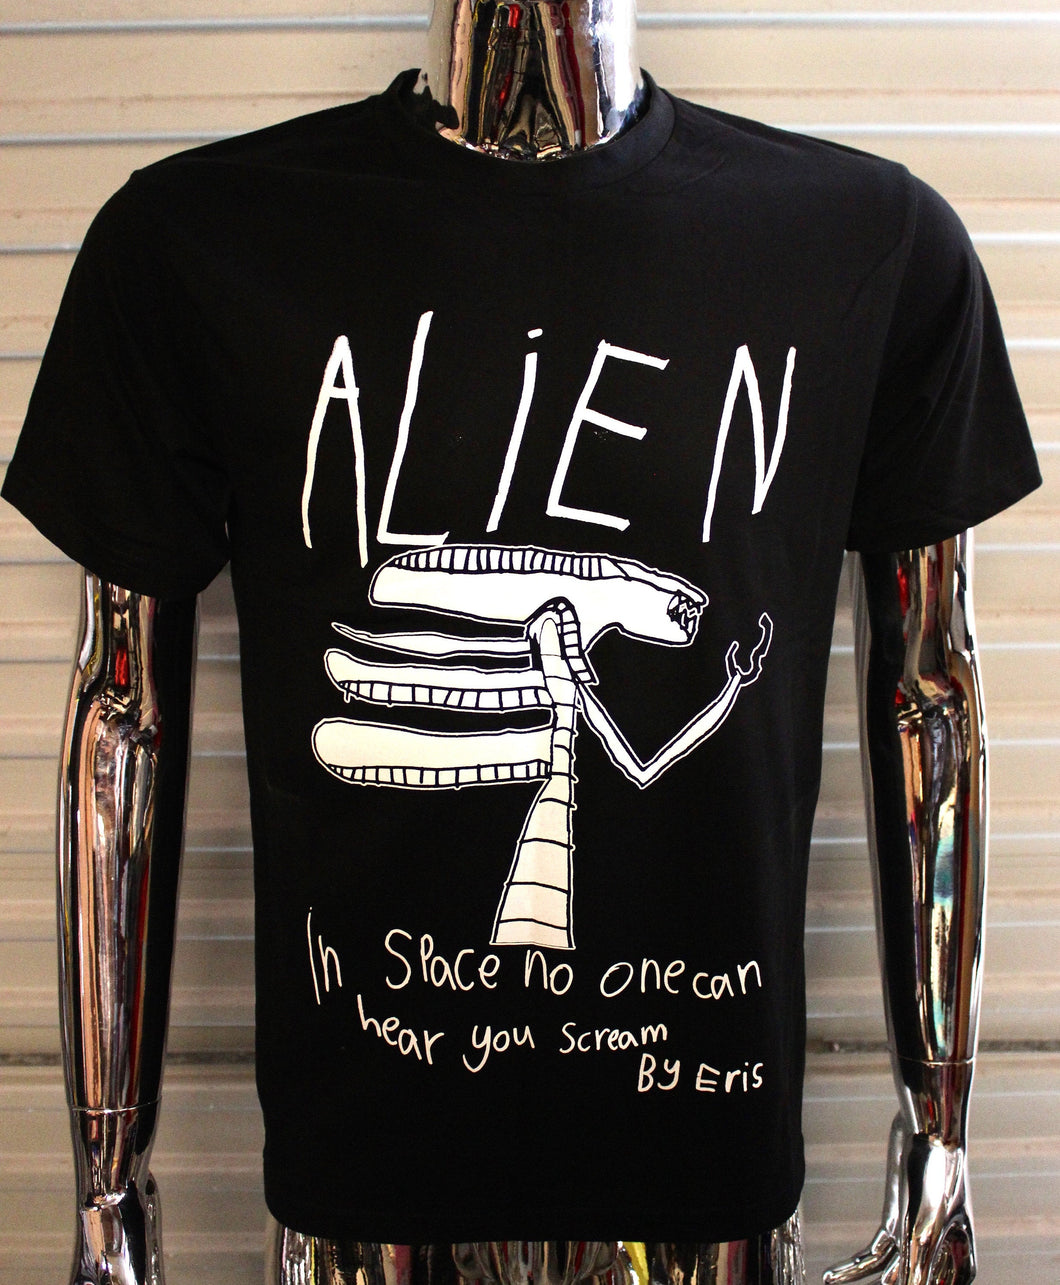 Alien by Eris T-shirt